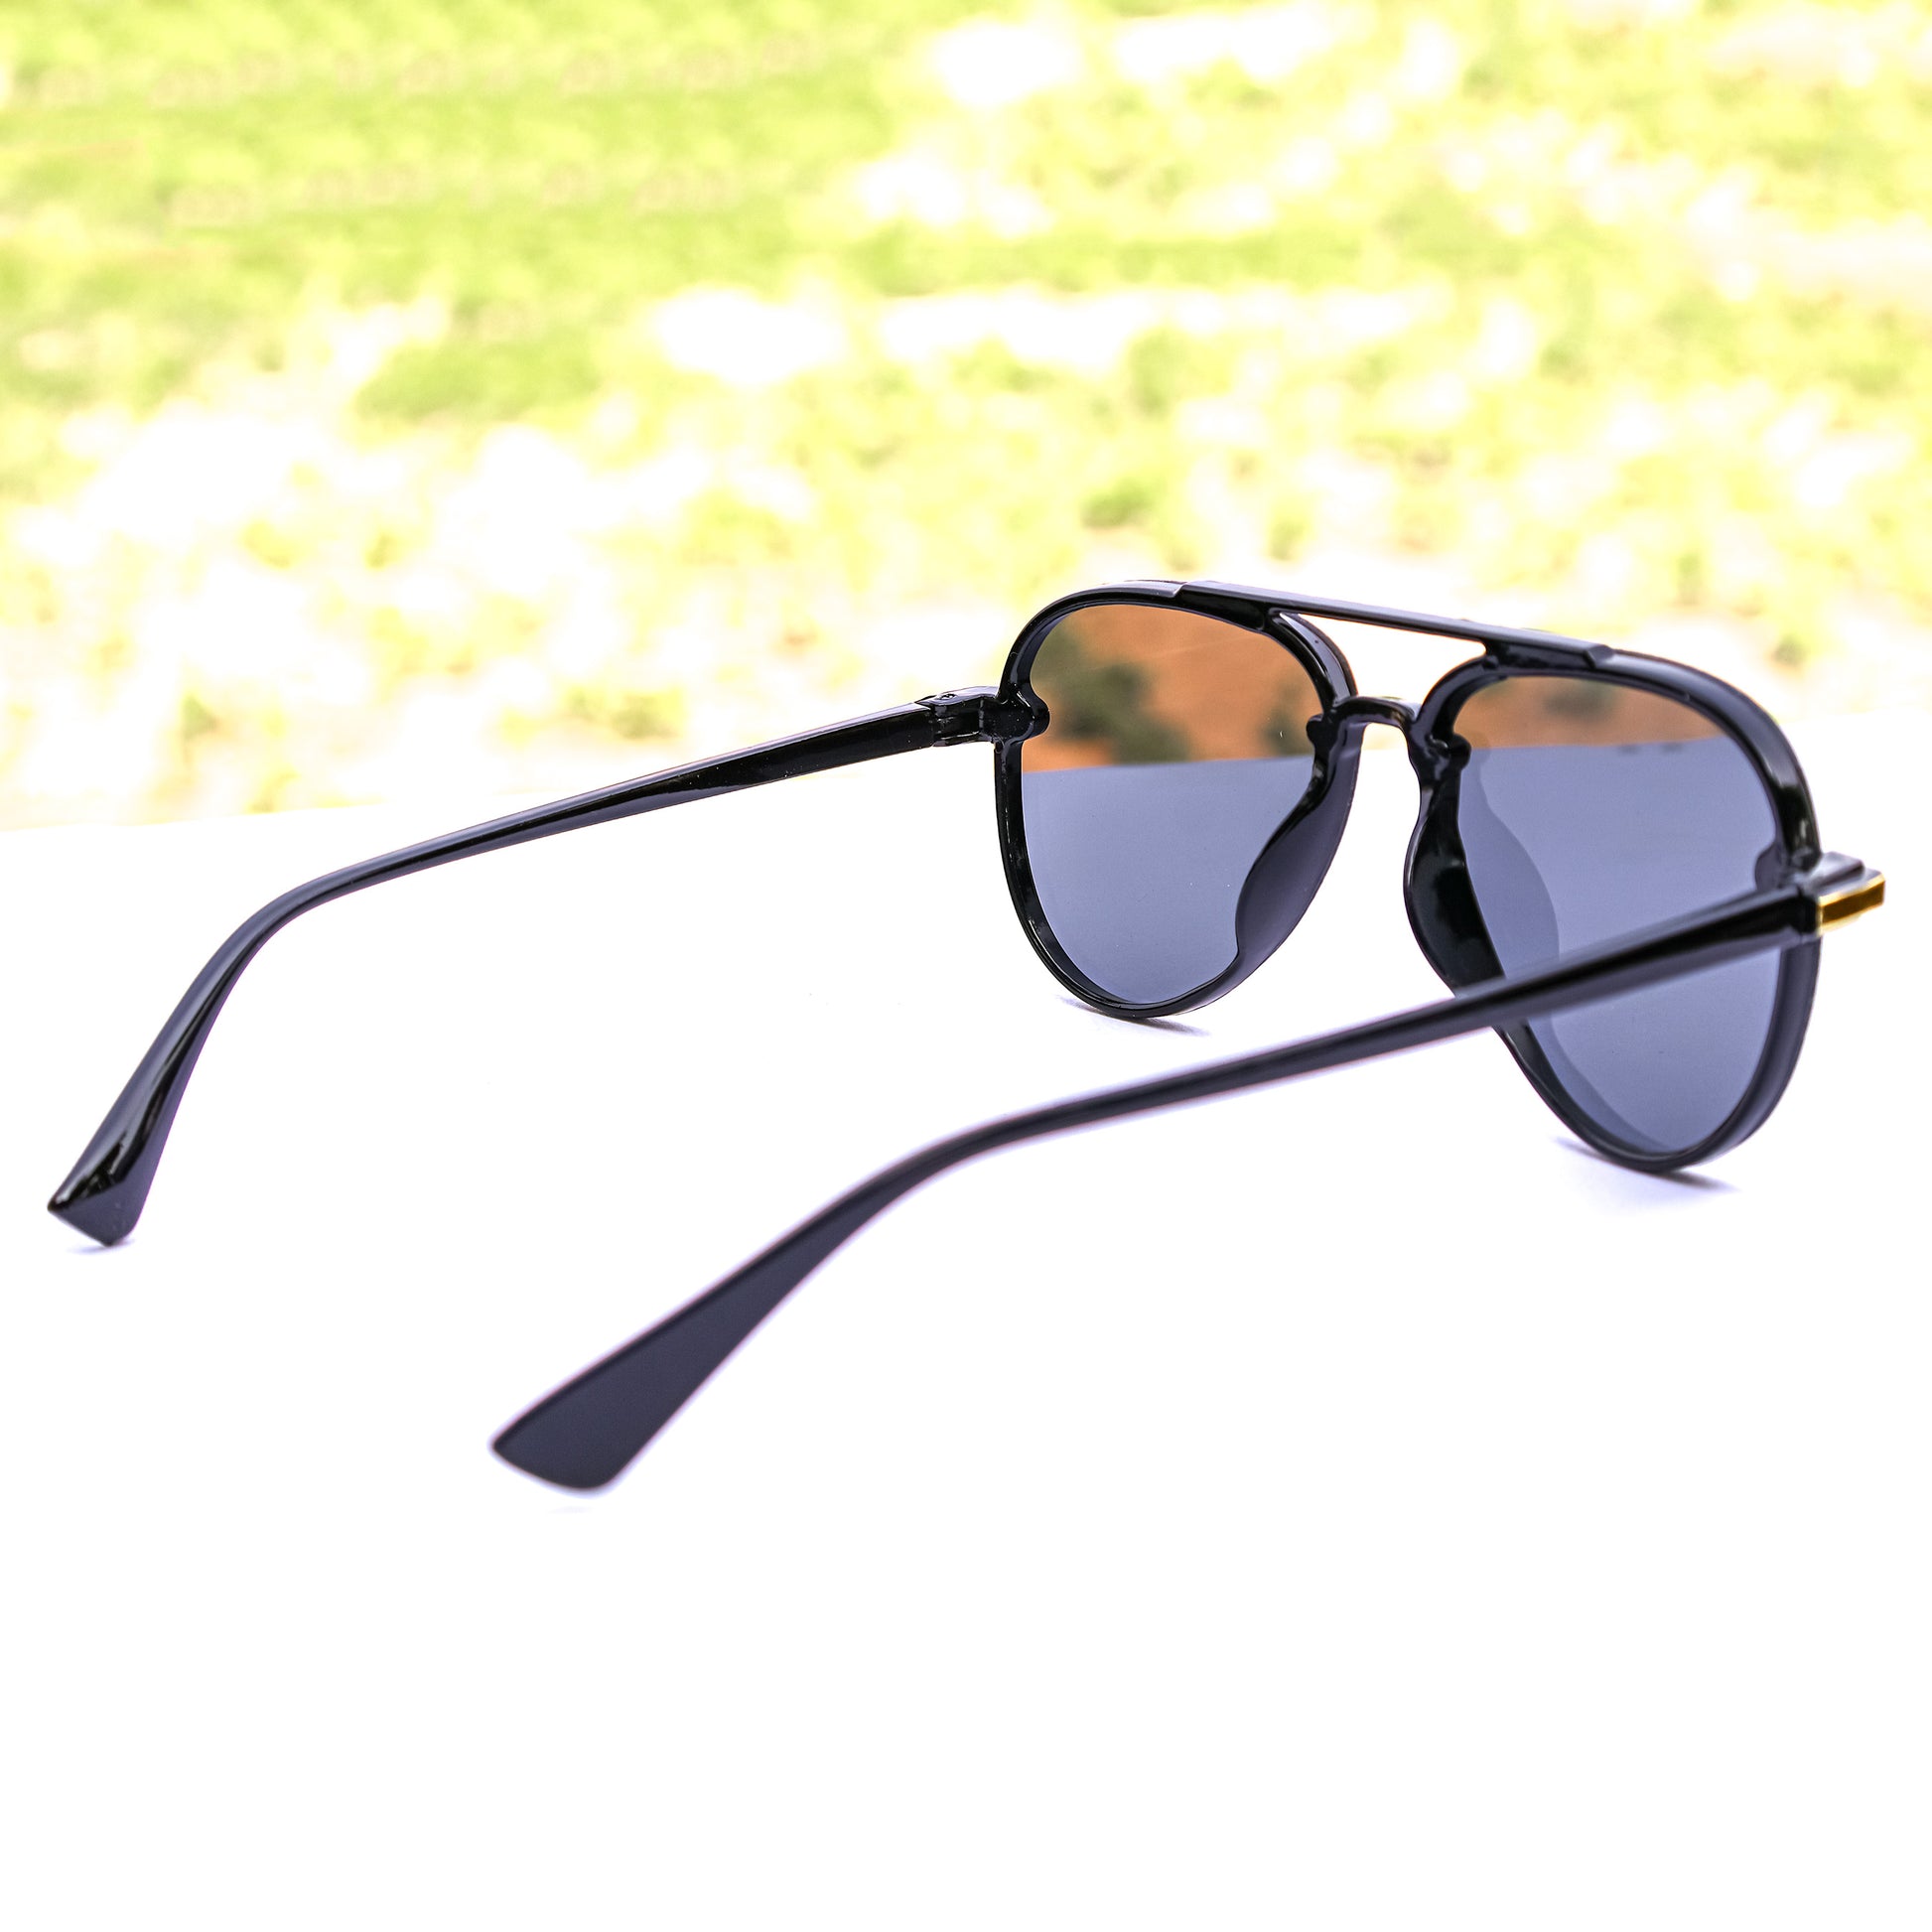 Jiebo 100% UV Protection Aviator Sunglasses